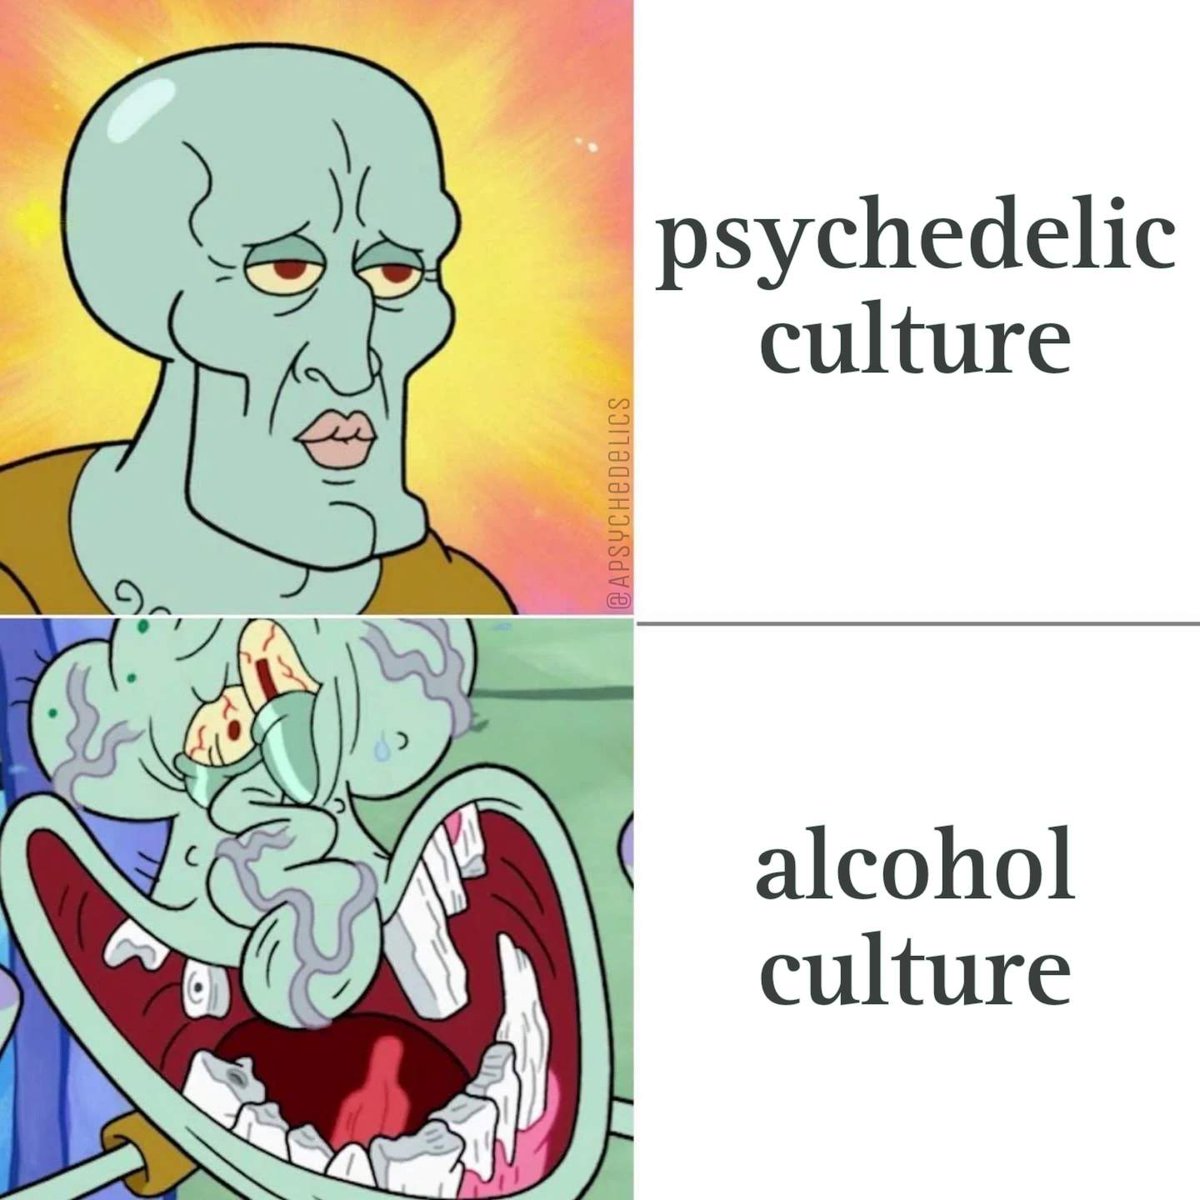 Psychedelic culture vs Alcohol culture 🖖👽